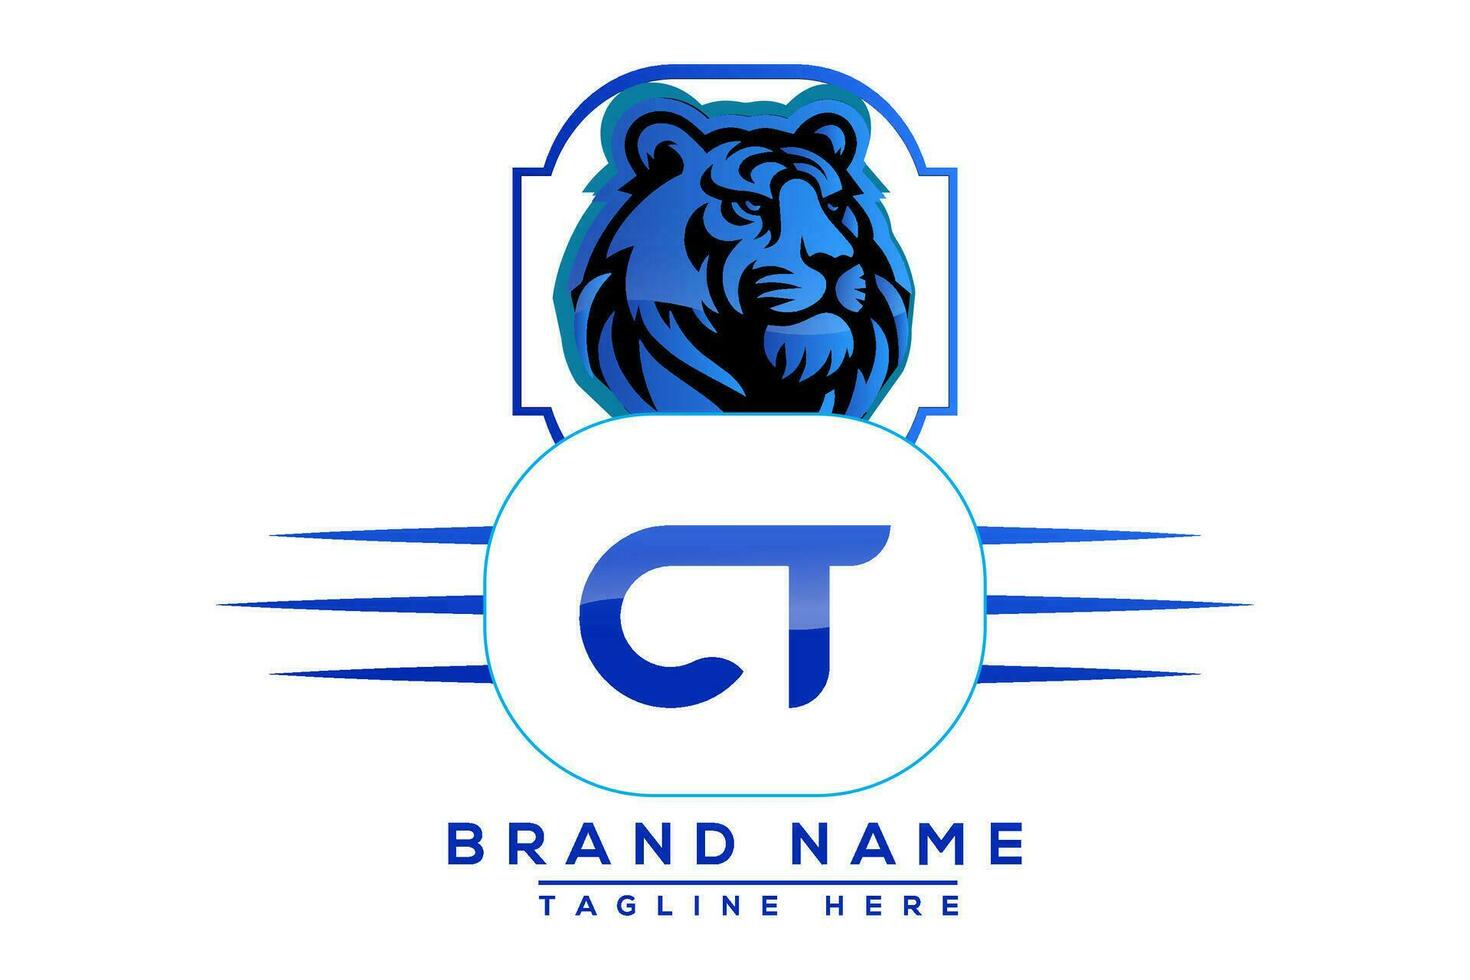 tigre ct bleu logo conception. vecteur logo conception pour entreprise.